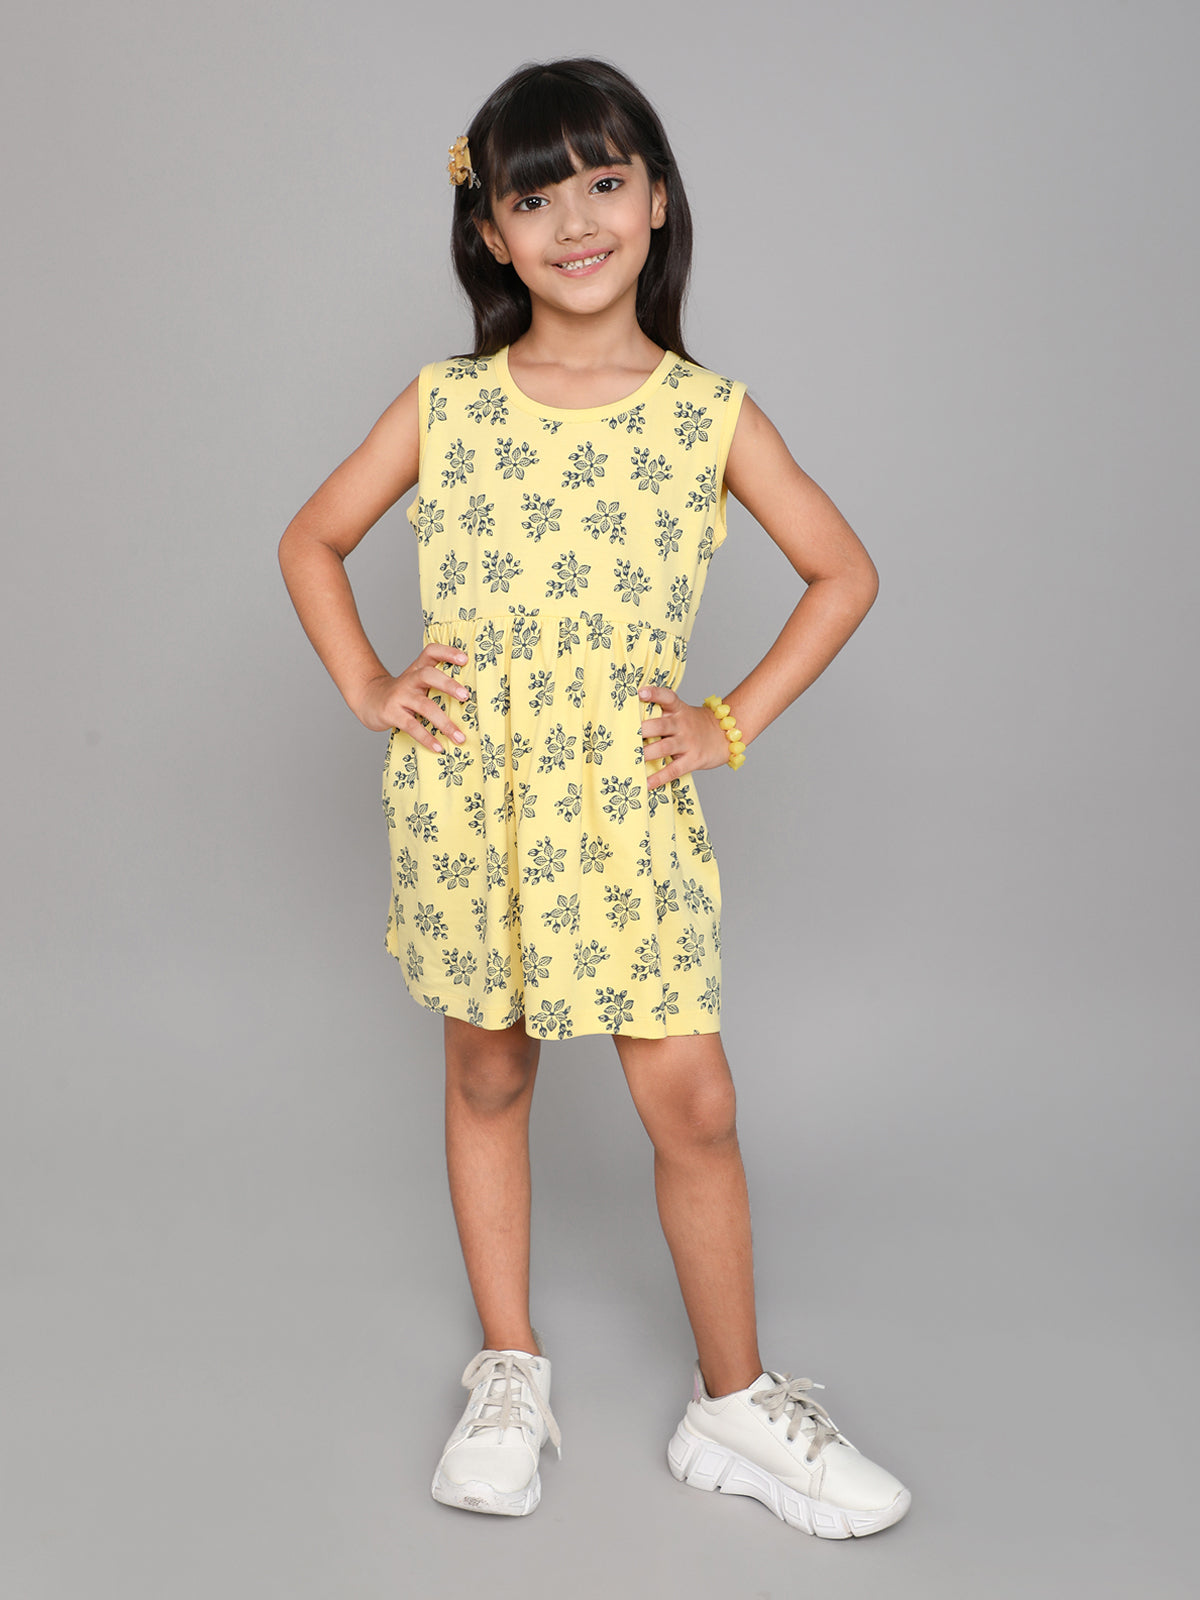 Printed Cotton Sleeveless Yellow Dress for Kids